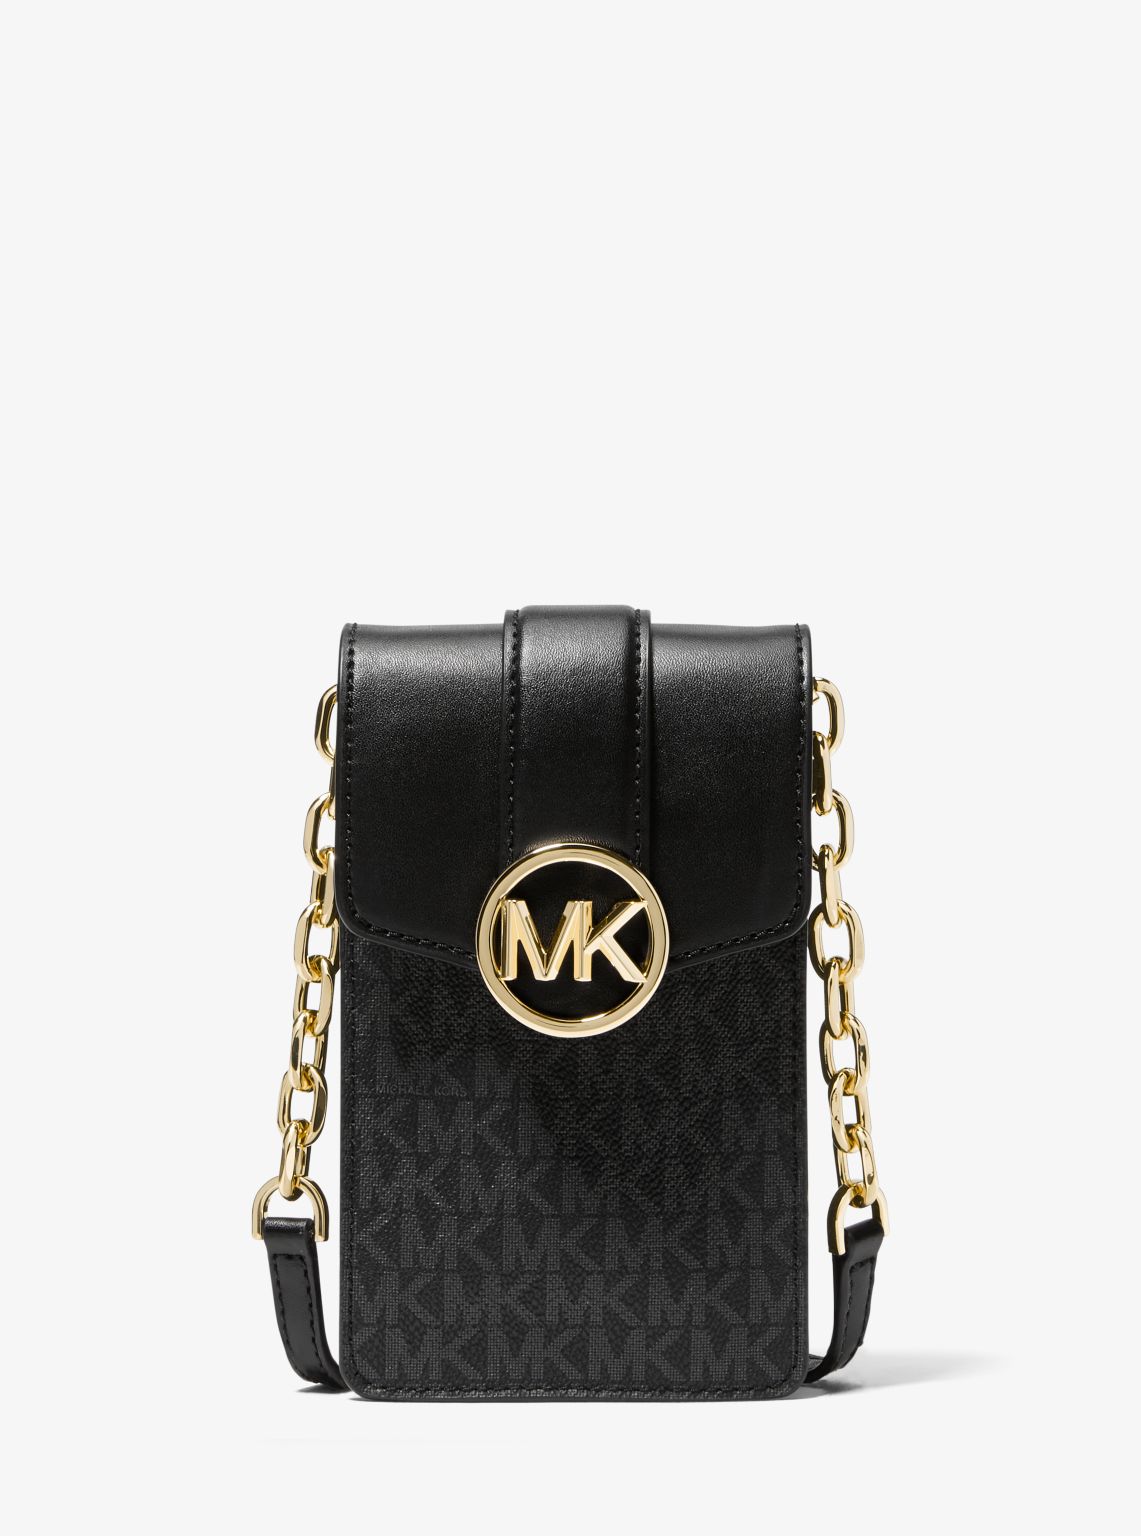  Michael Kors Handbags